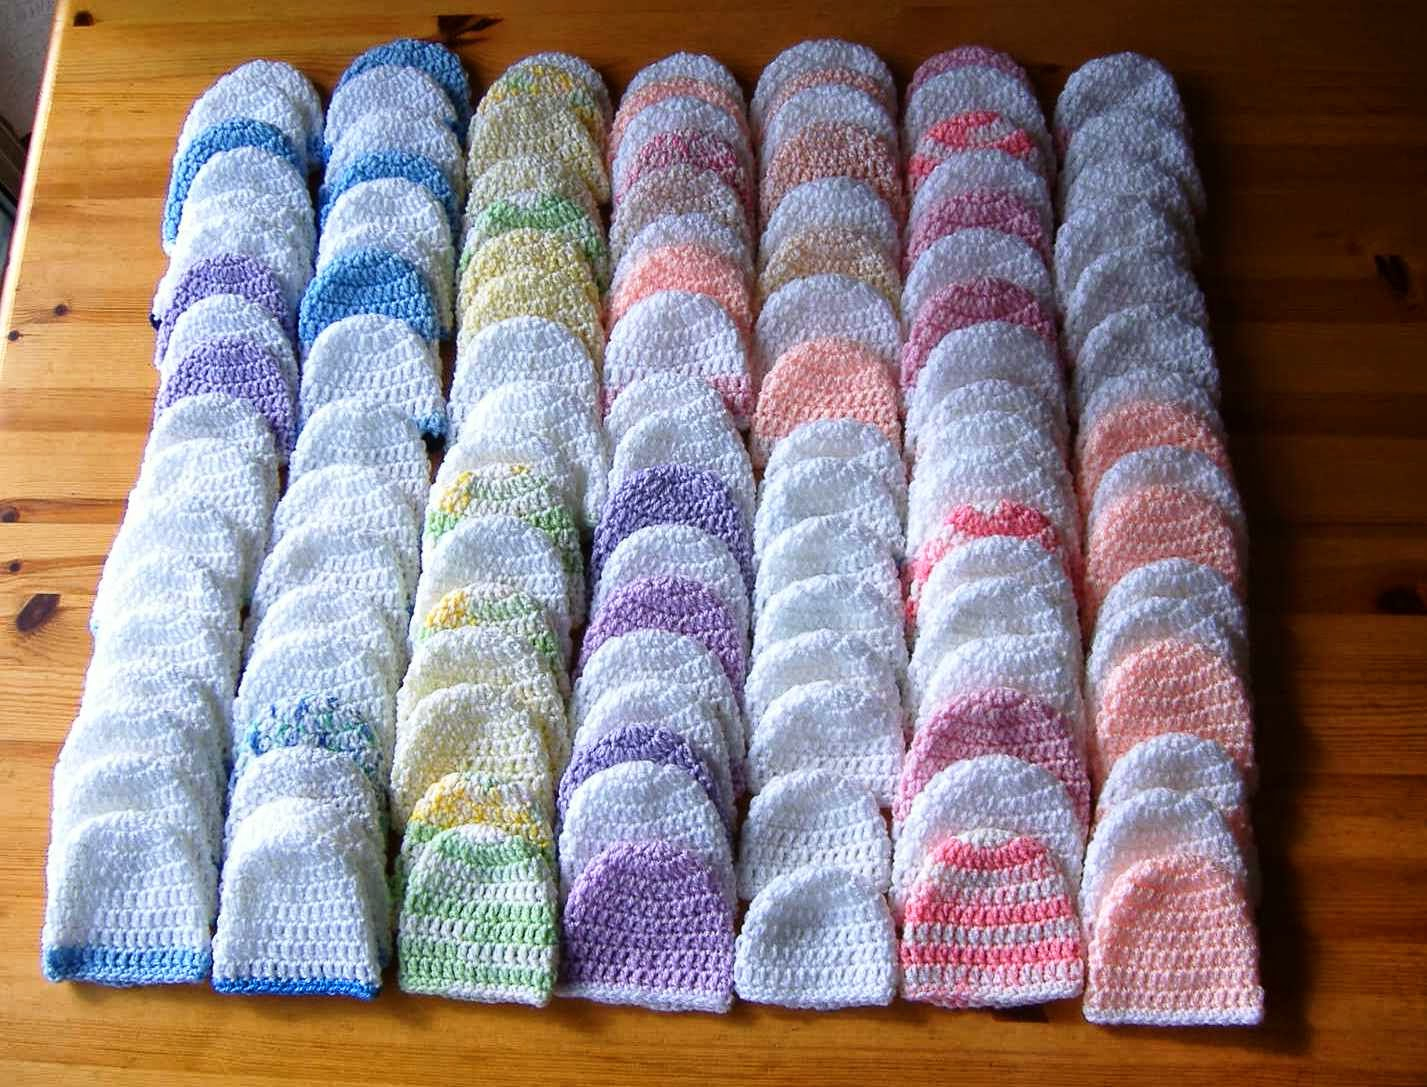 Knitted Preemie Hat Patterns Knitting Patterns Stitch Craft Blog Crochet Patterns